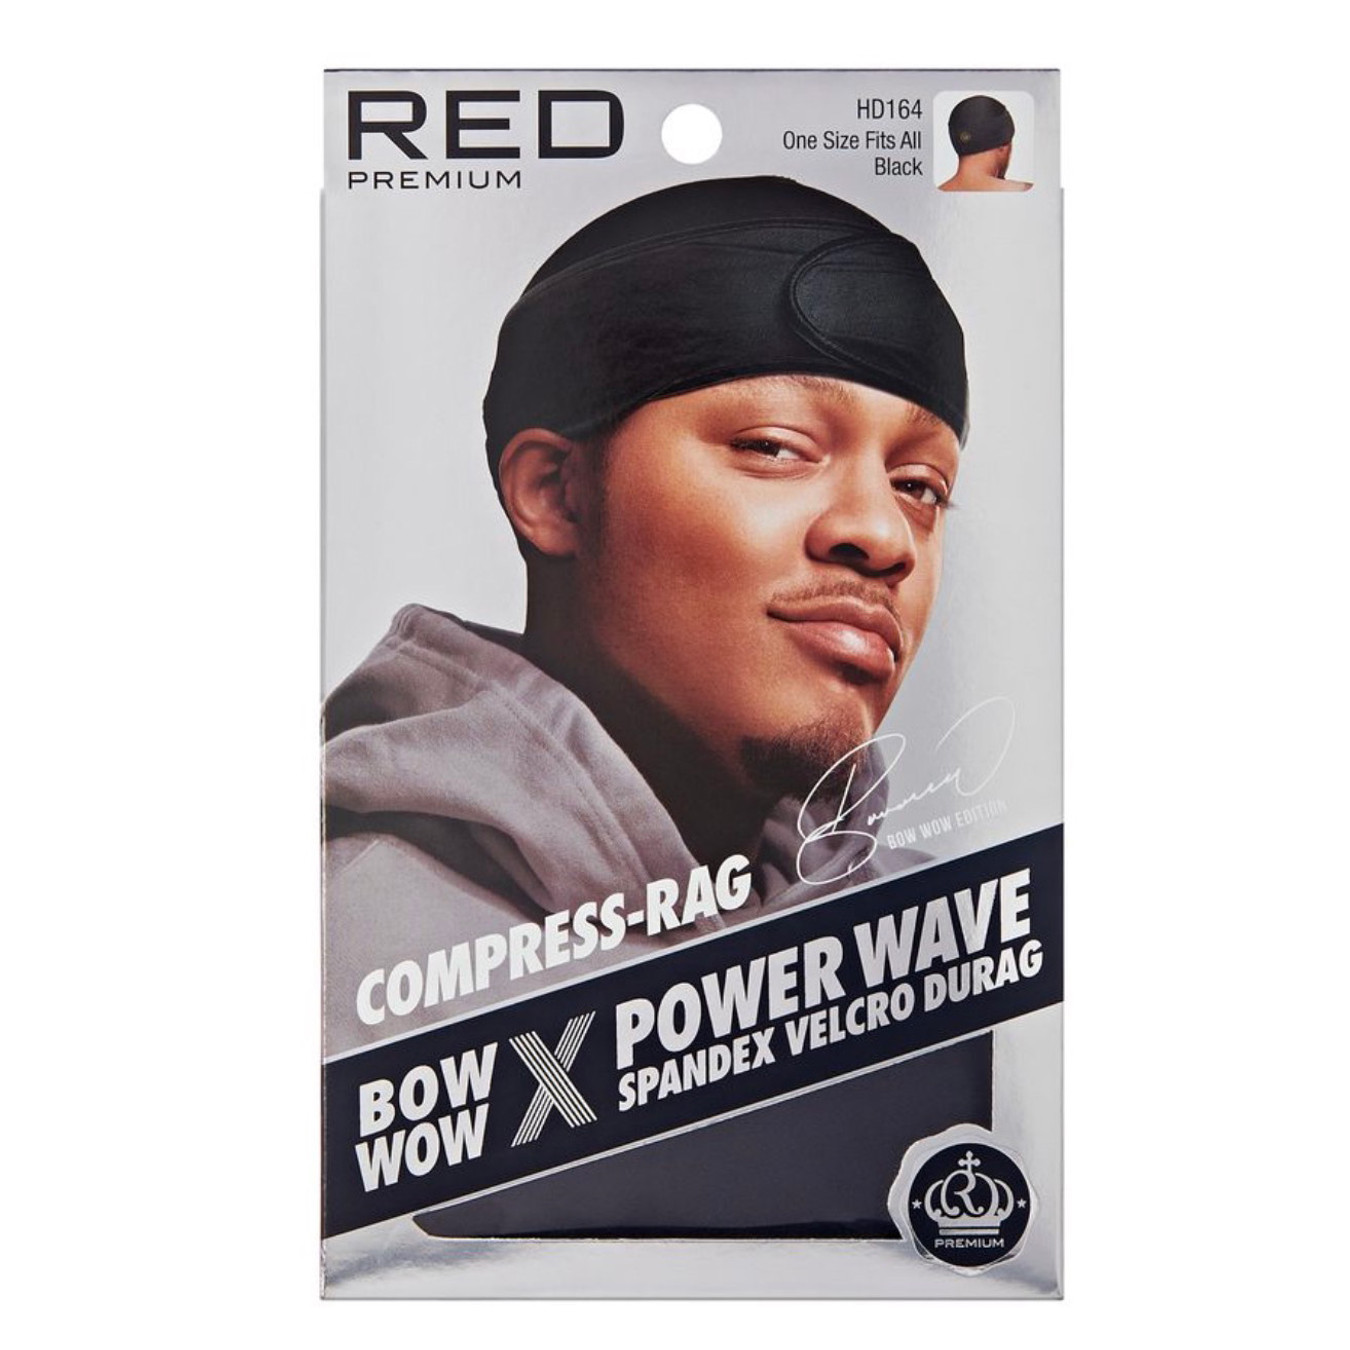 RED Power Wave Compress Rag Spandex Durag (Black)